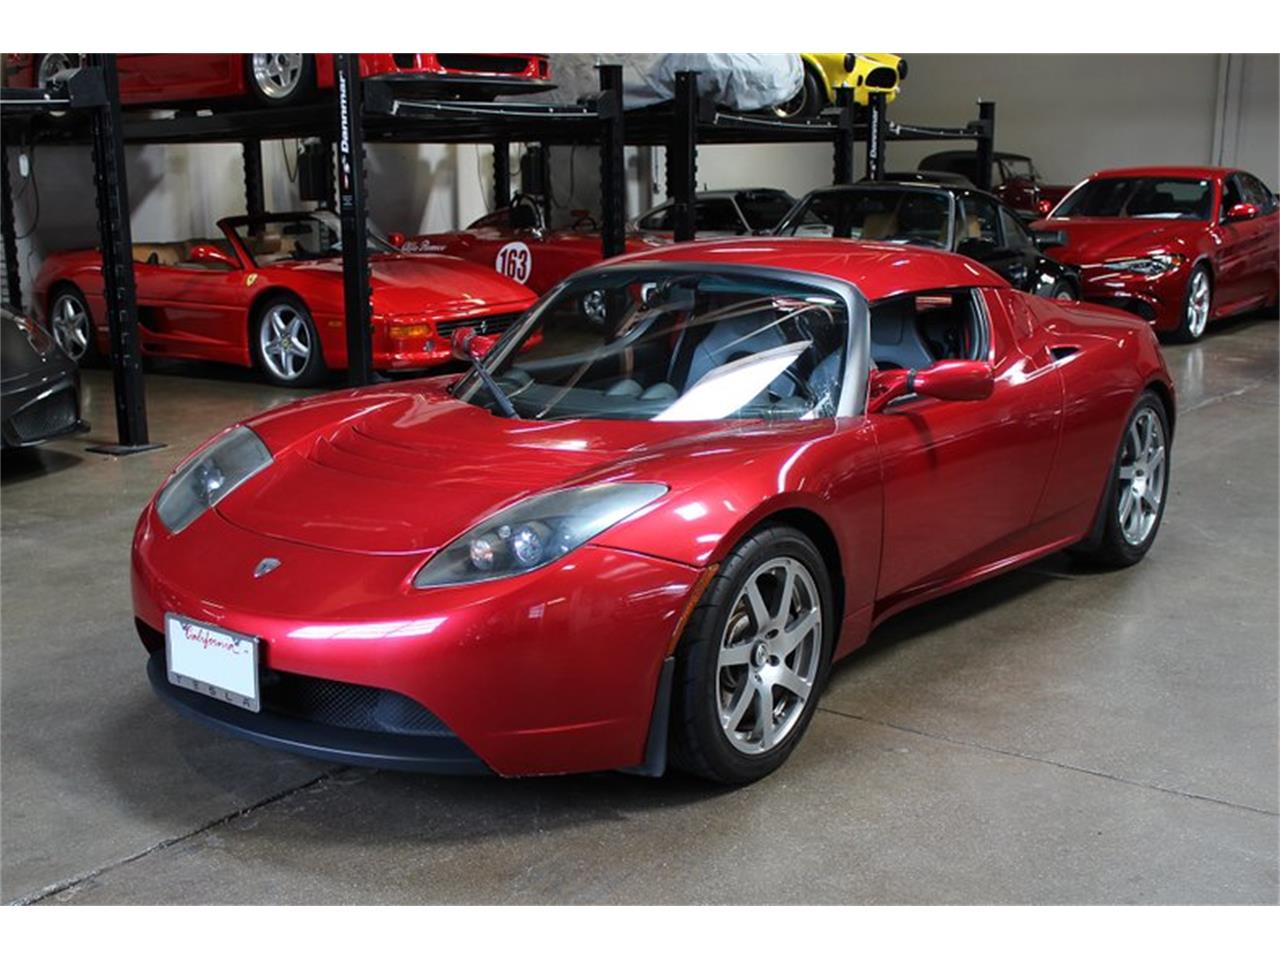 2008 Tesla Roadster for Sale | ClassicCars.com | CC-1070553